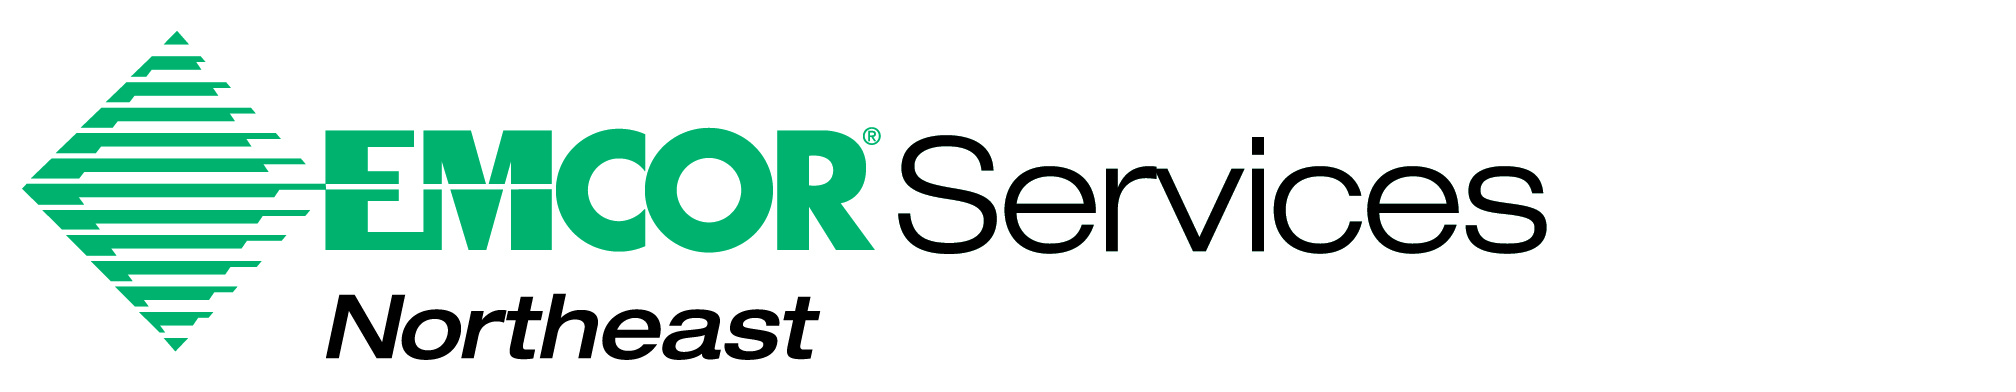 EMCOR Services Northeast Logo